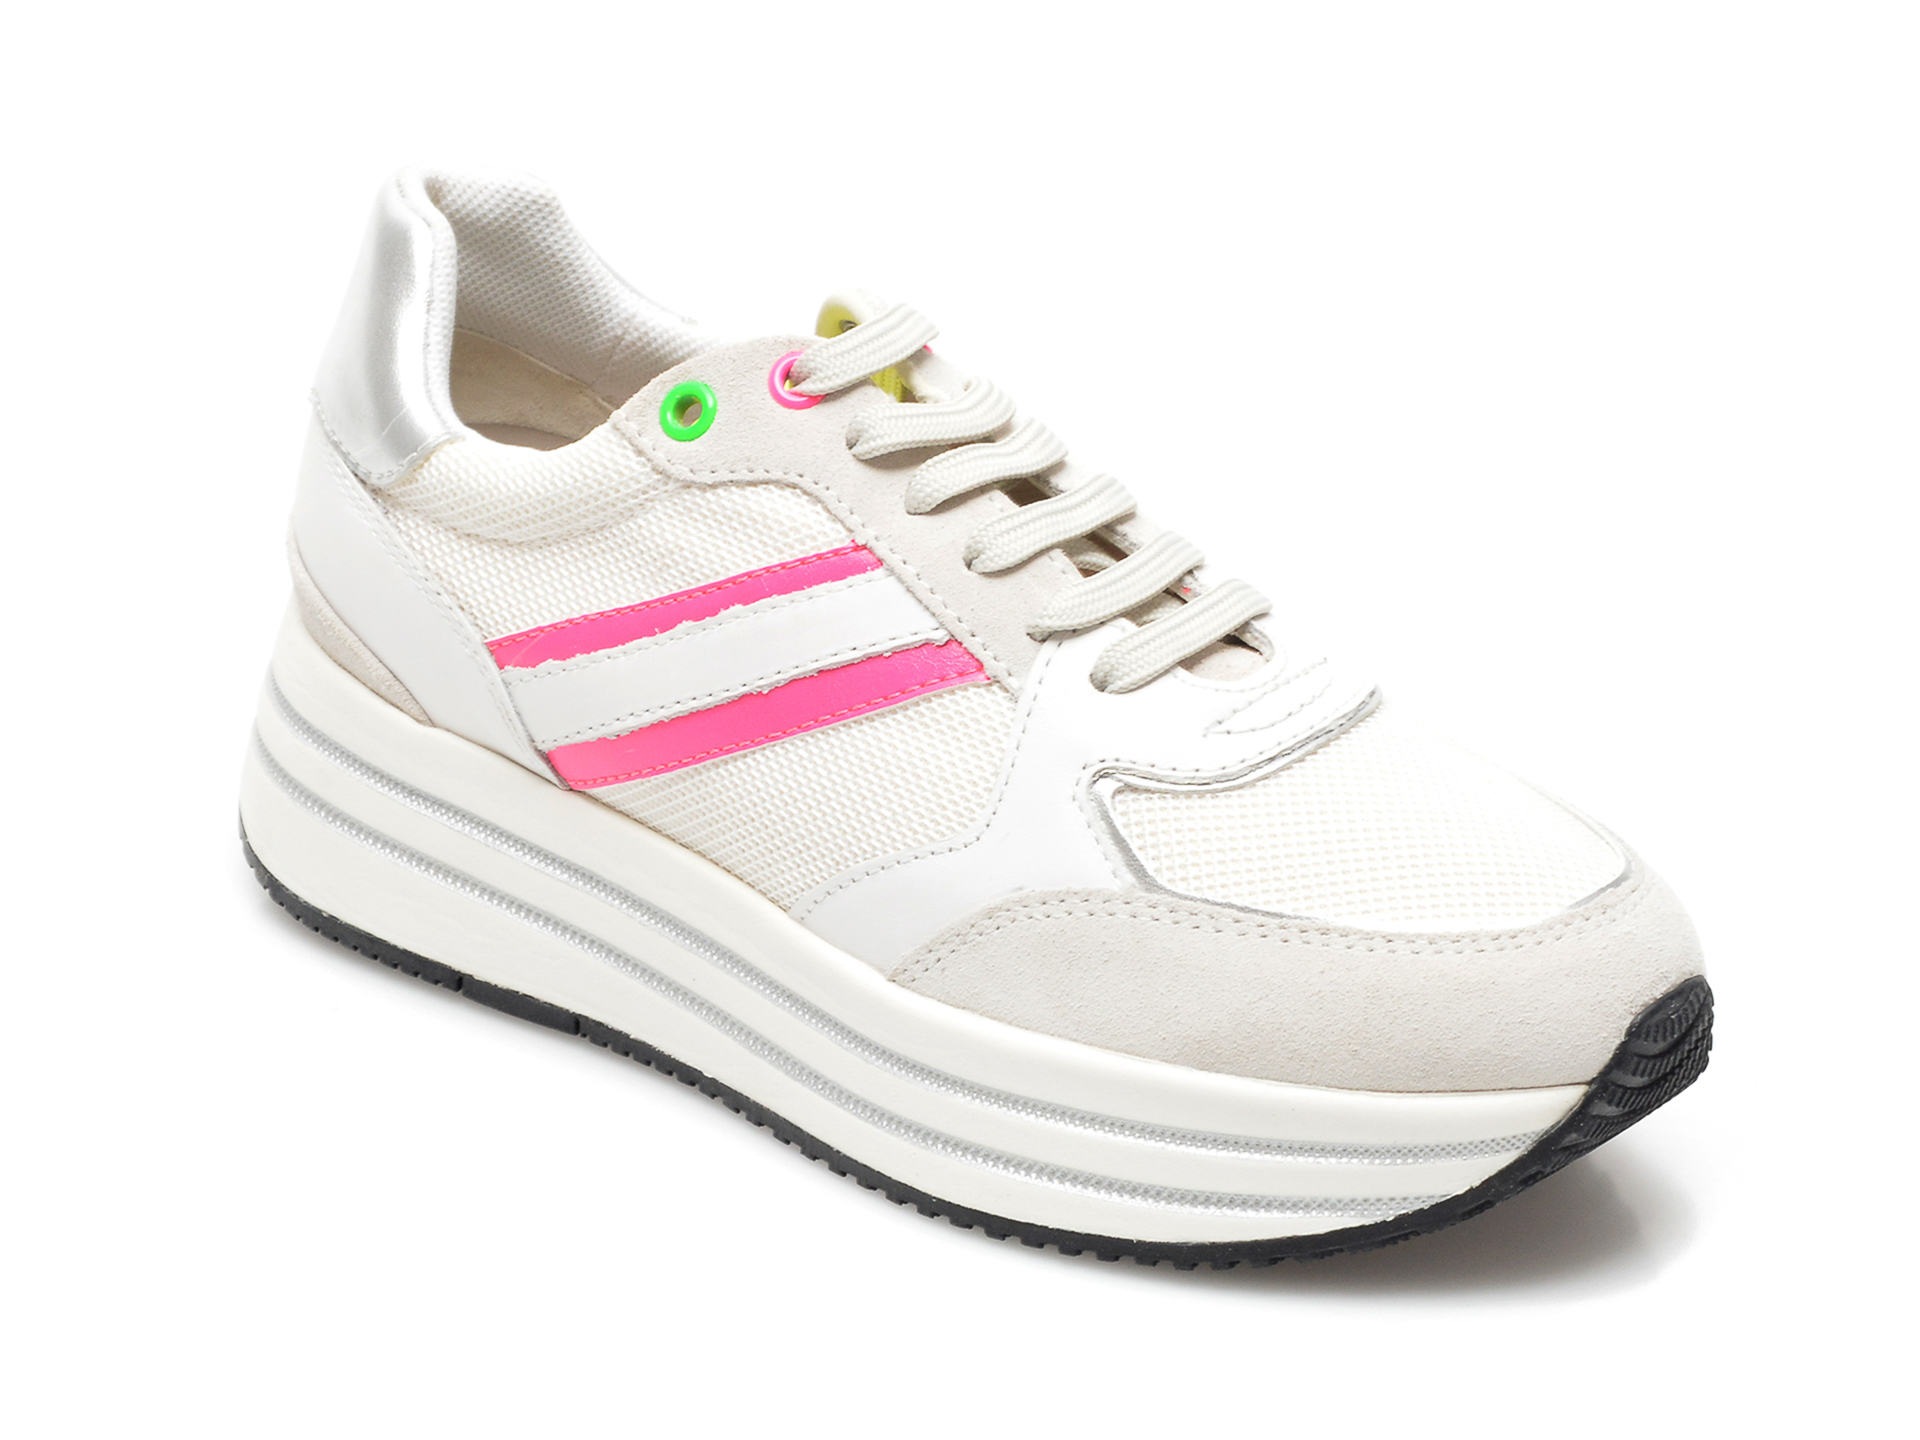 Pantofi sport GEOX albi, D16QHB, din material textil si piele naturala Geox